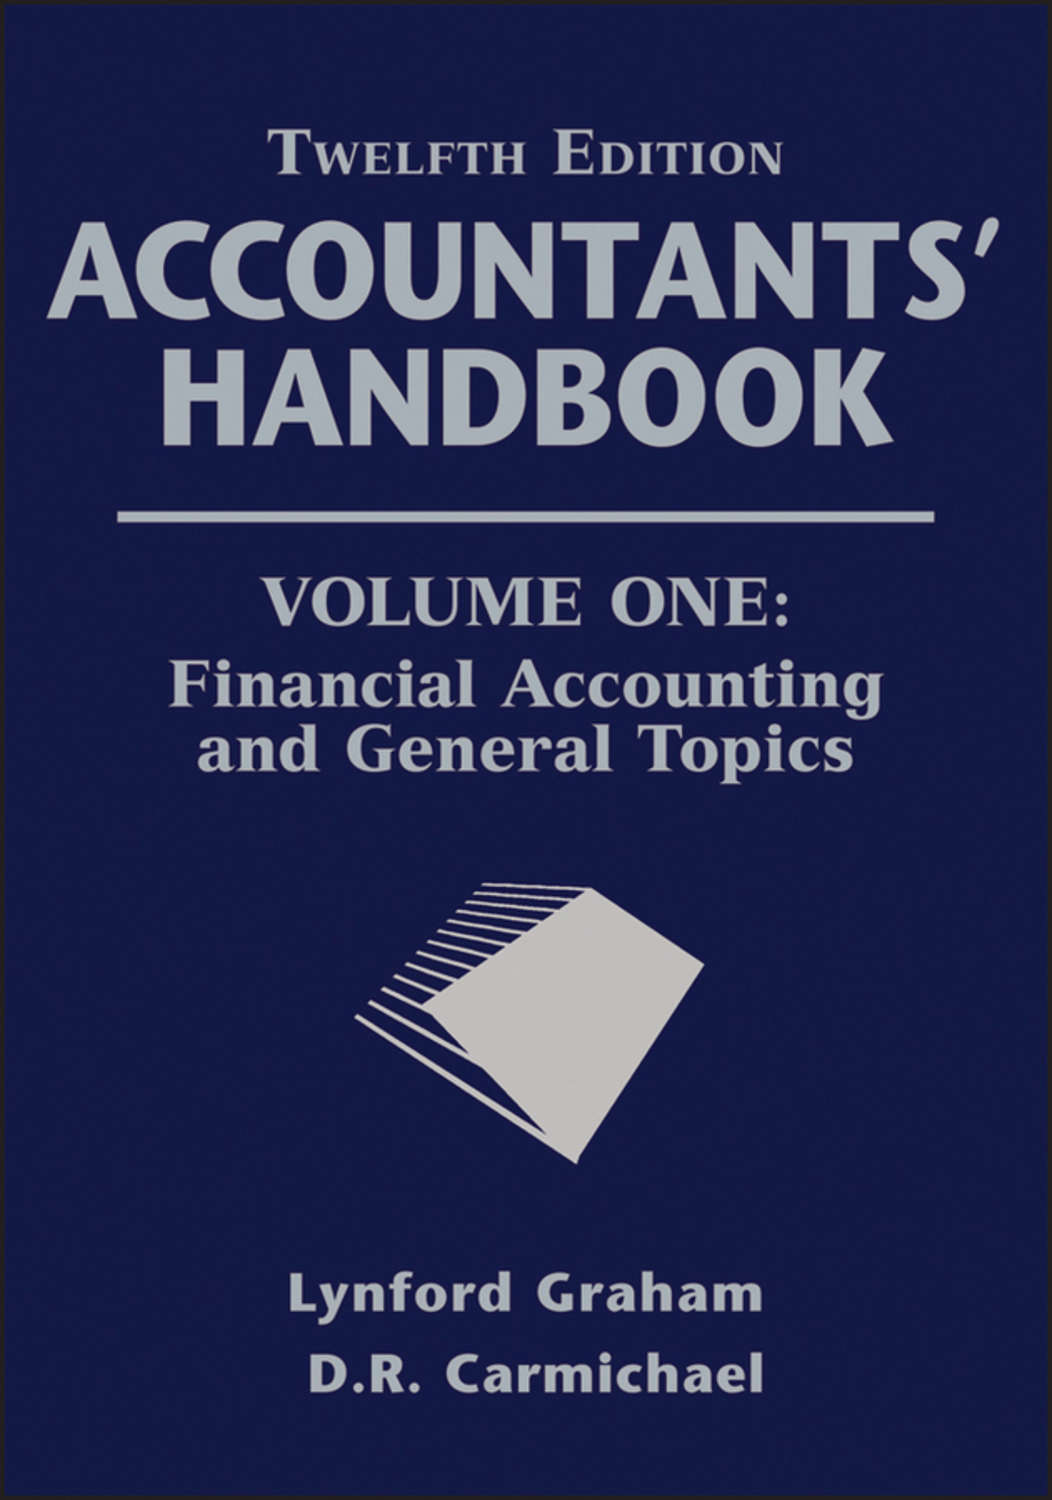 Accounting book. Financial Accounting books. General topics. Handbook of Finance. Federal Accounting Handbook.